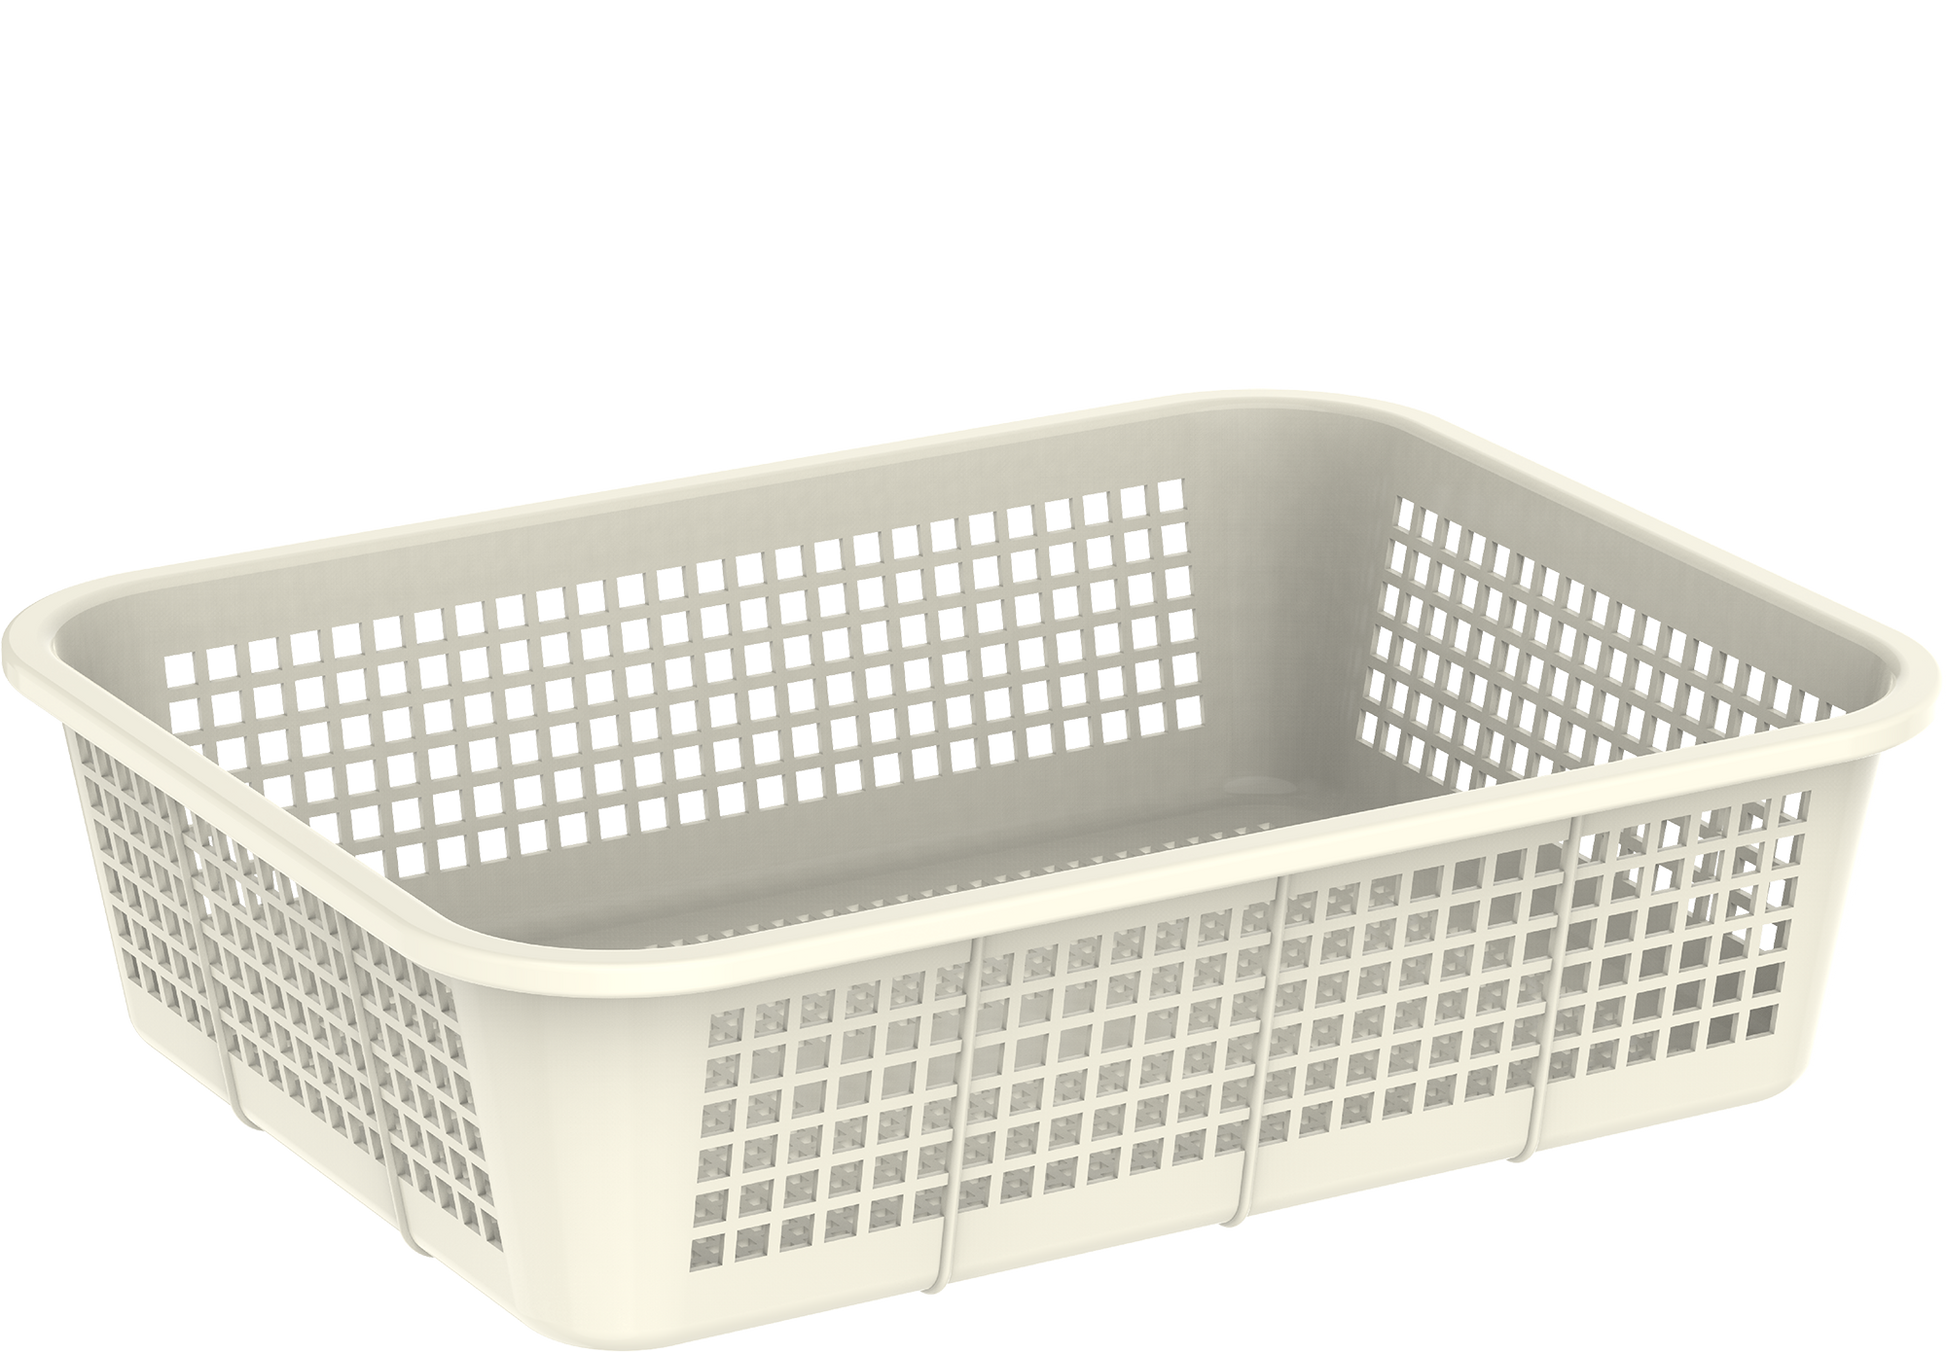 Small Fruit Tray Storage Basket - Cosmoplast Qatar